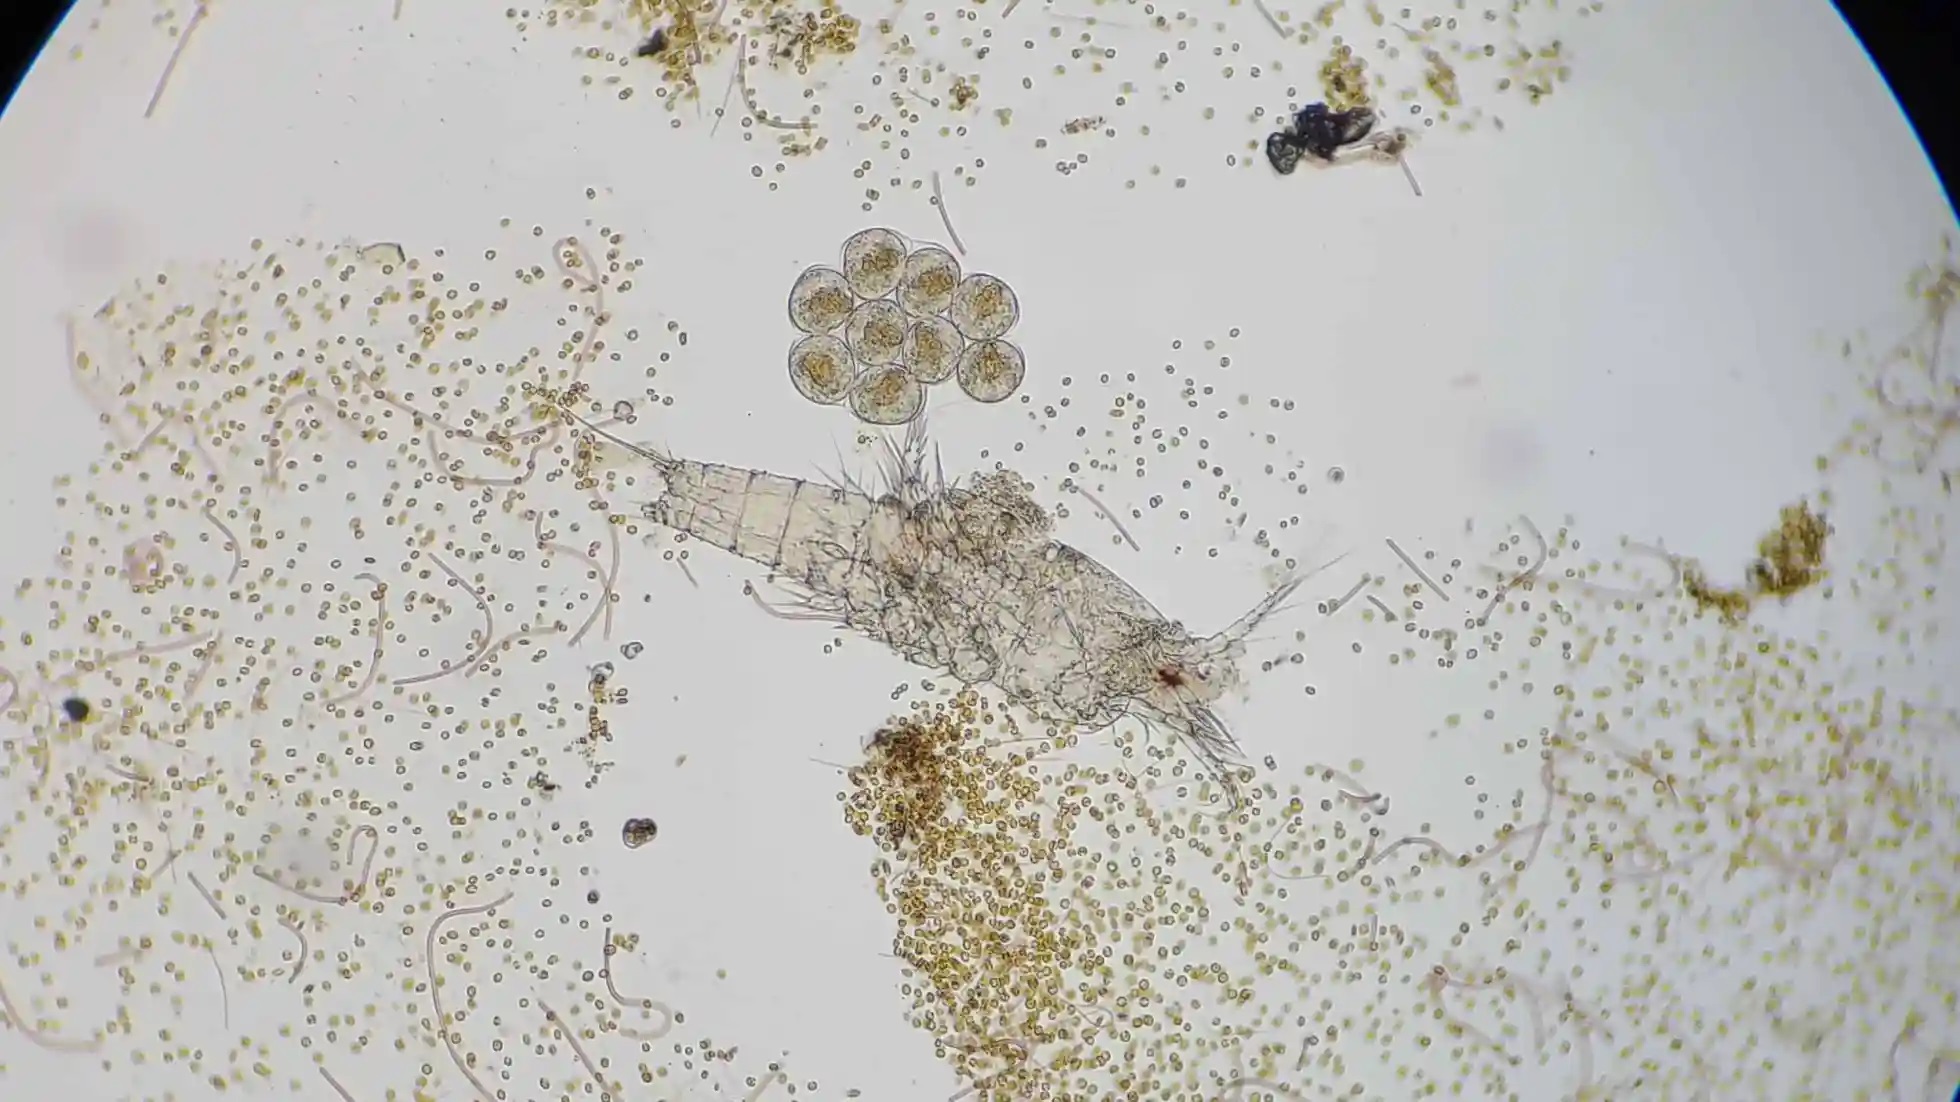 copepods under microscope